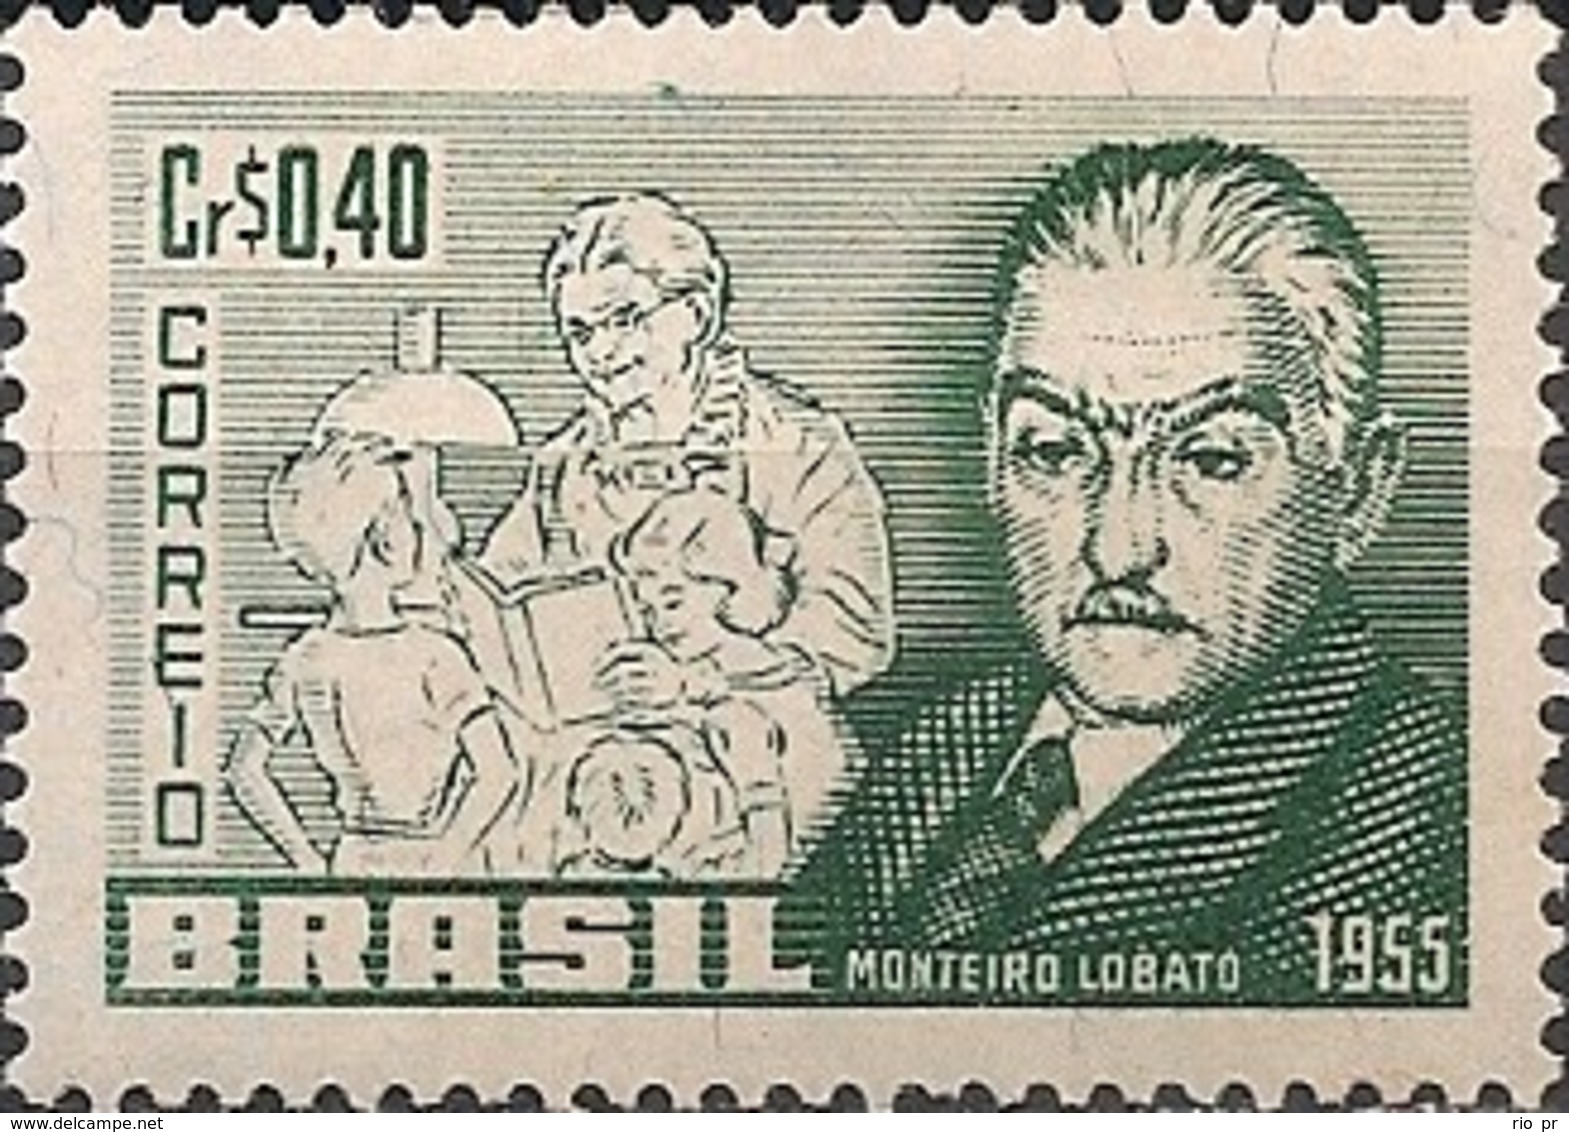 BRAZIL - MONTEIRO LOBATO (1882-1948), AUTHOR 1955 - MNH - Unused Stamps